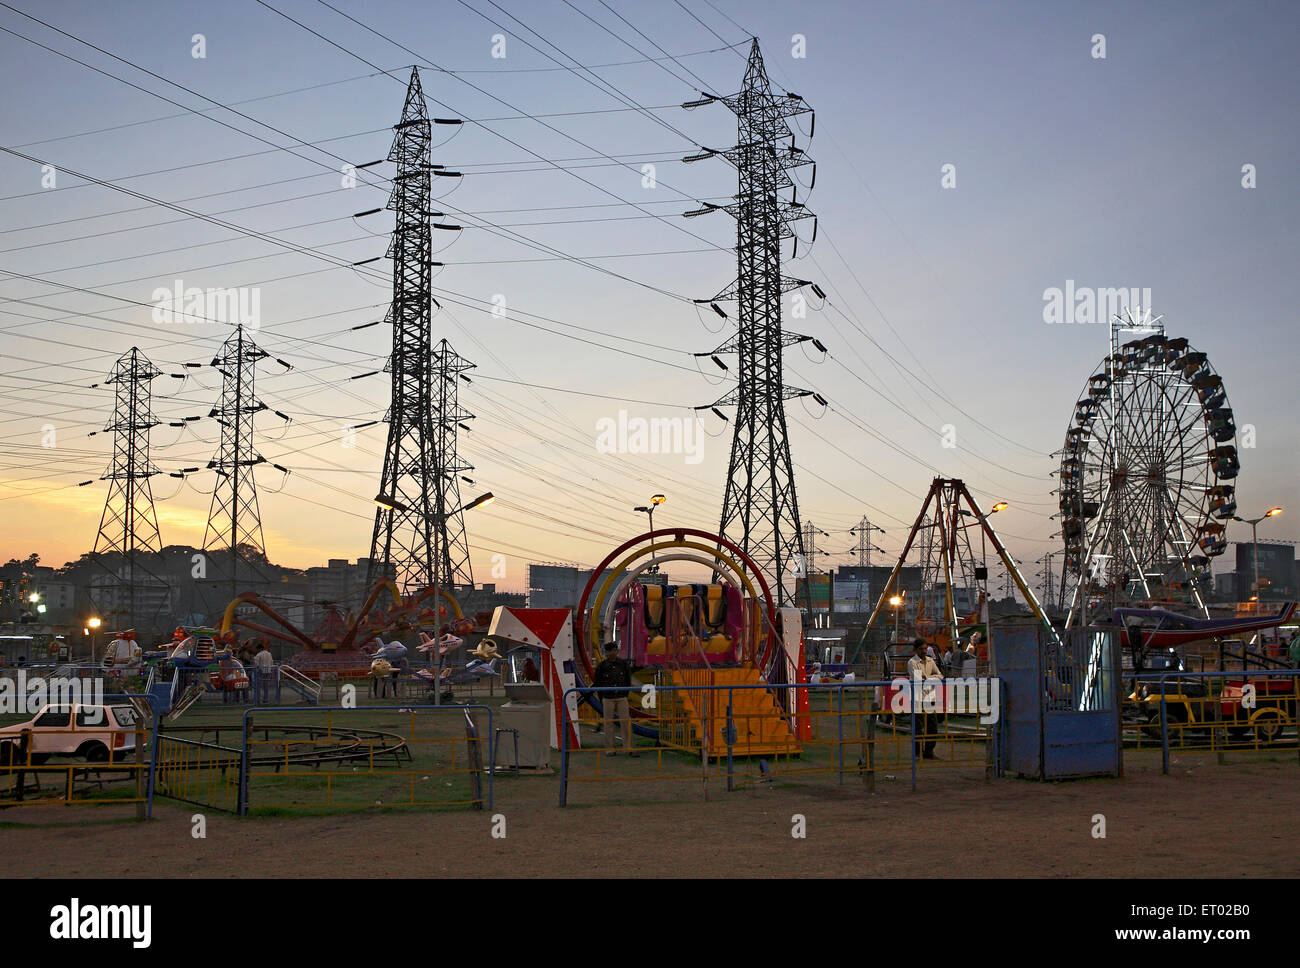 Ferris Wheel, Giant Wheel, amusement ride, electricity transmission tower, India, Asia Stock Photo